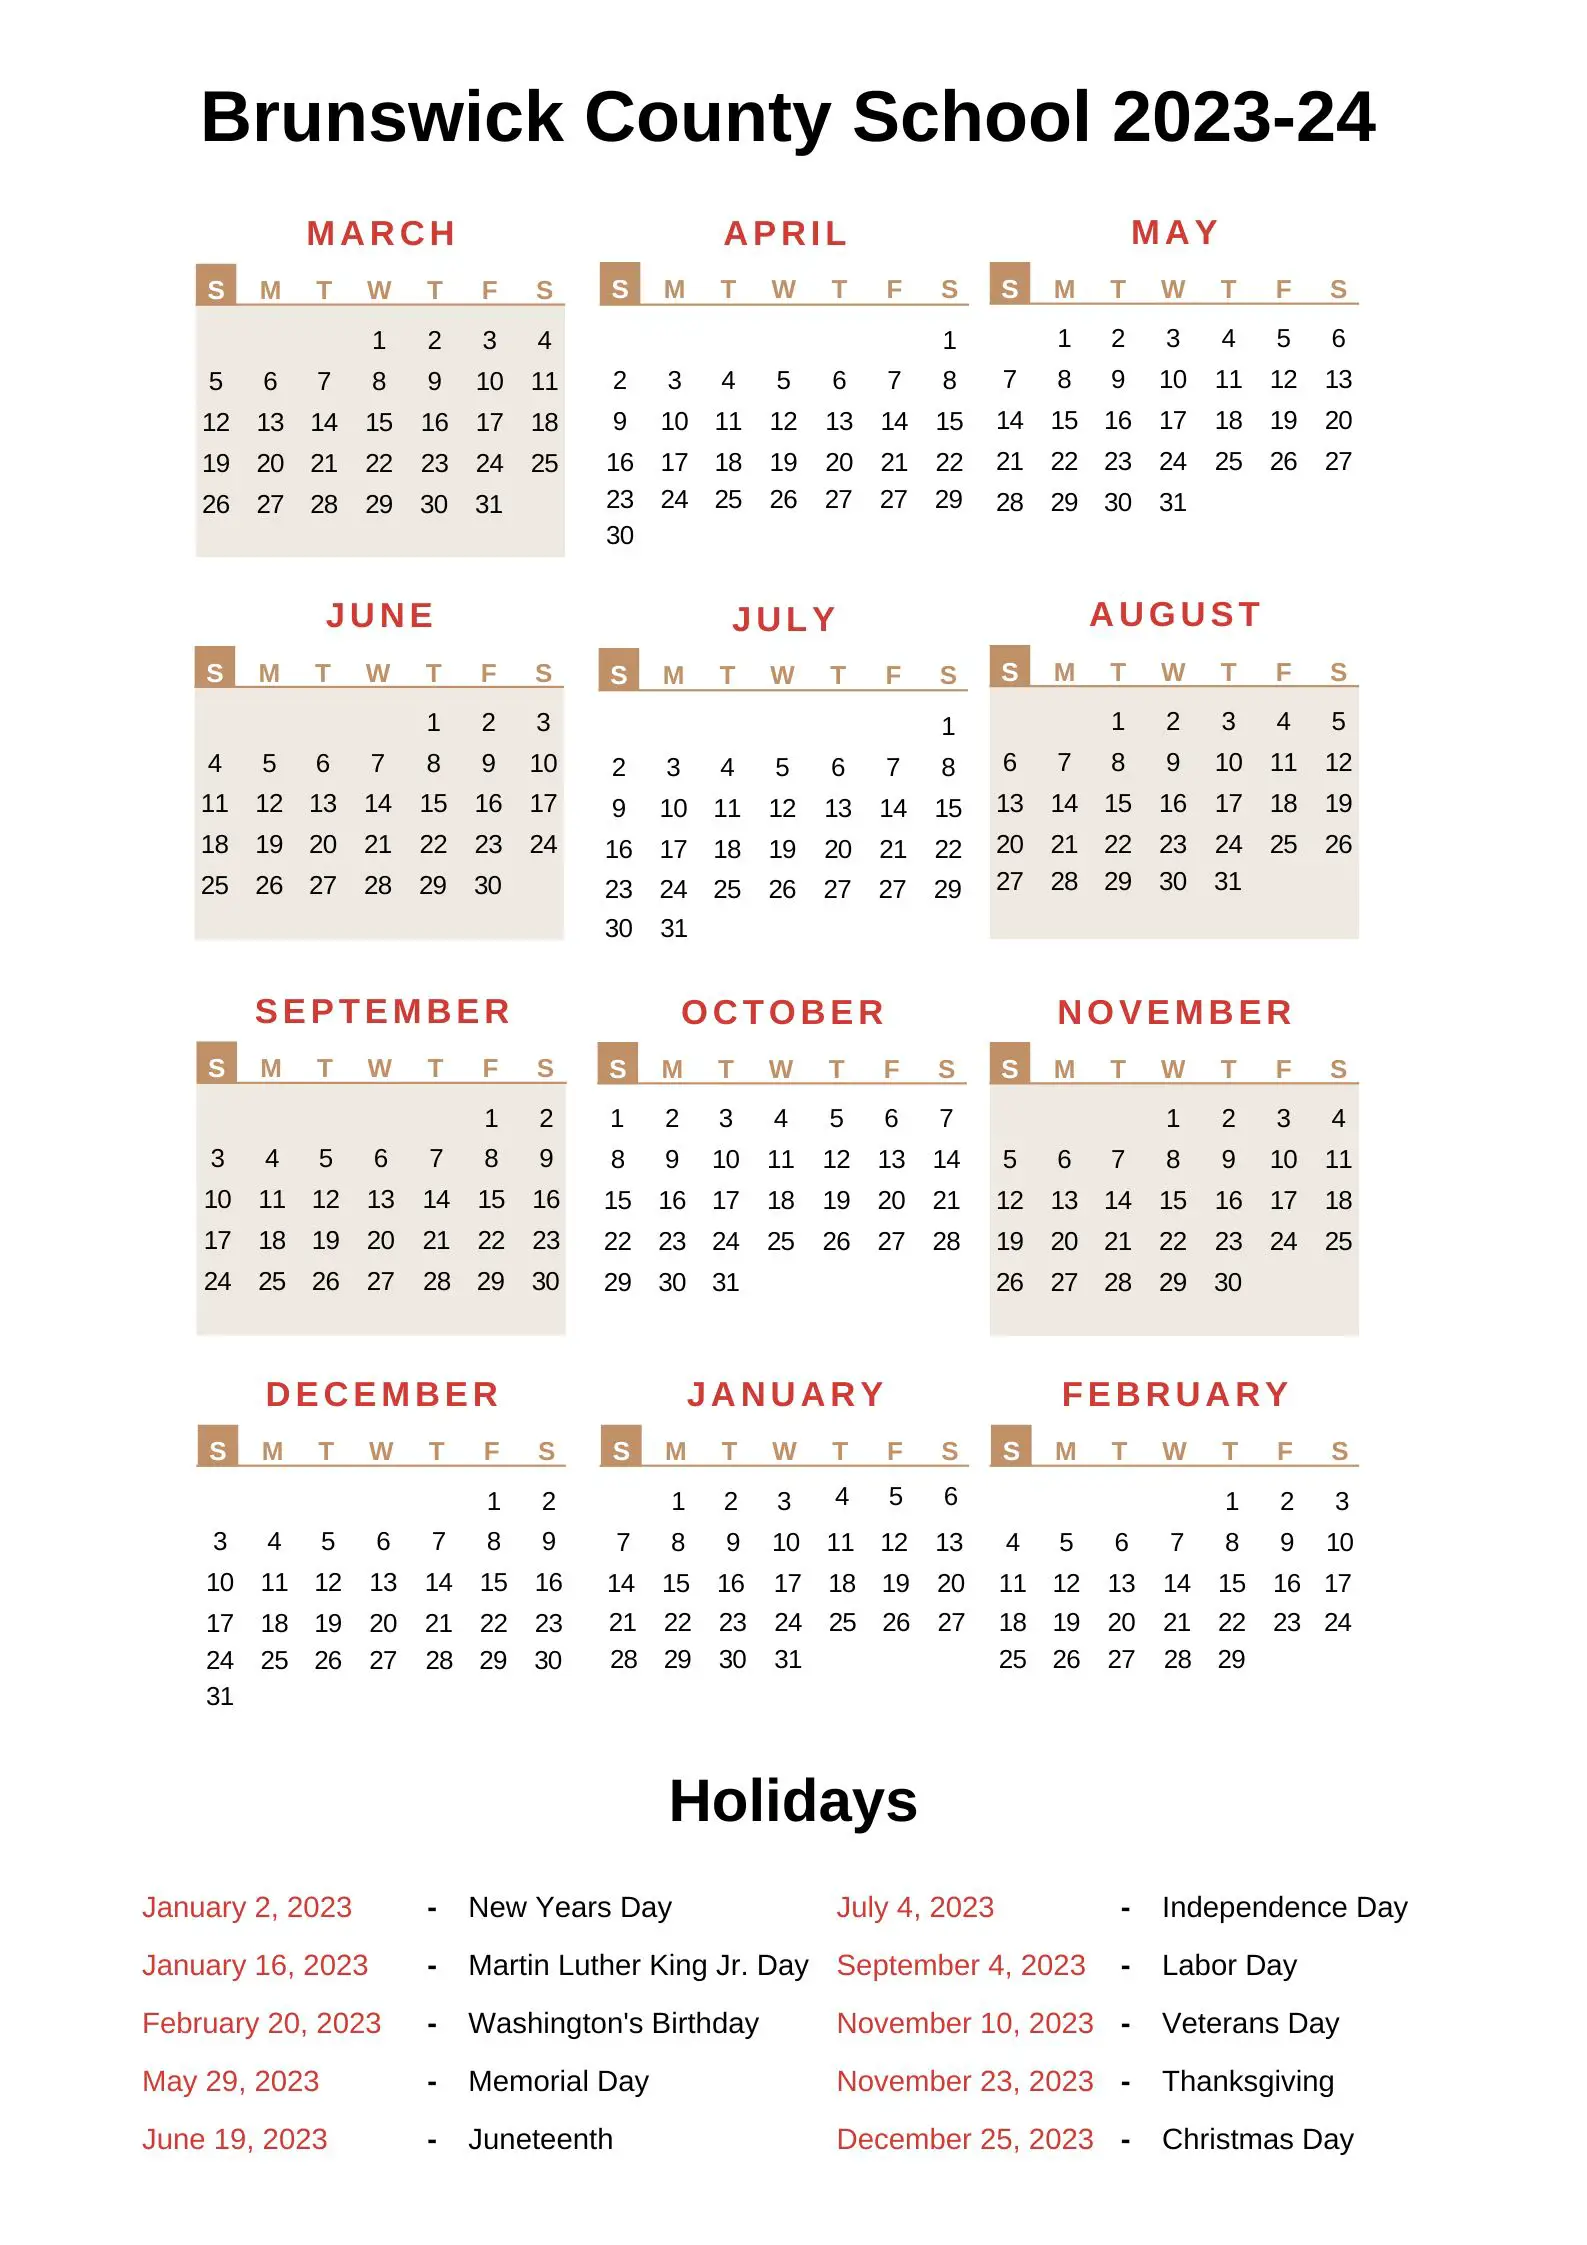 Brunswick County Schools Calendar 2023-24 With Holidays